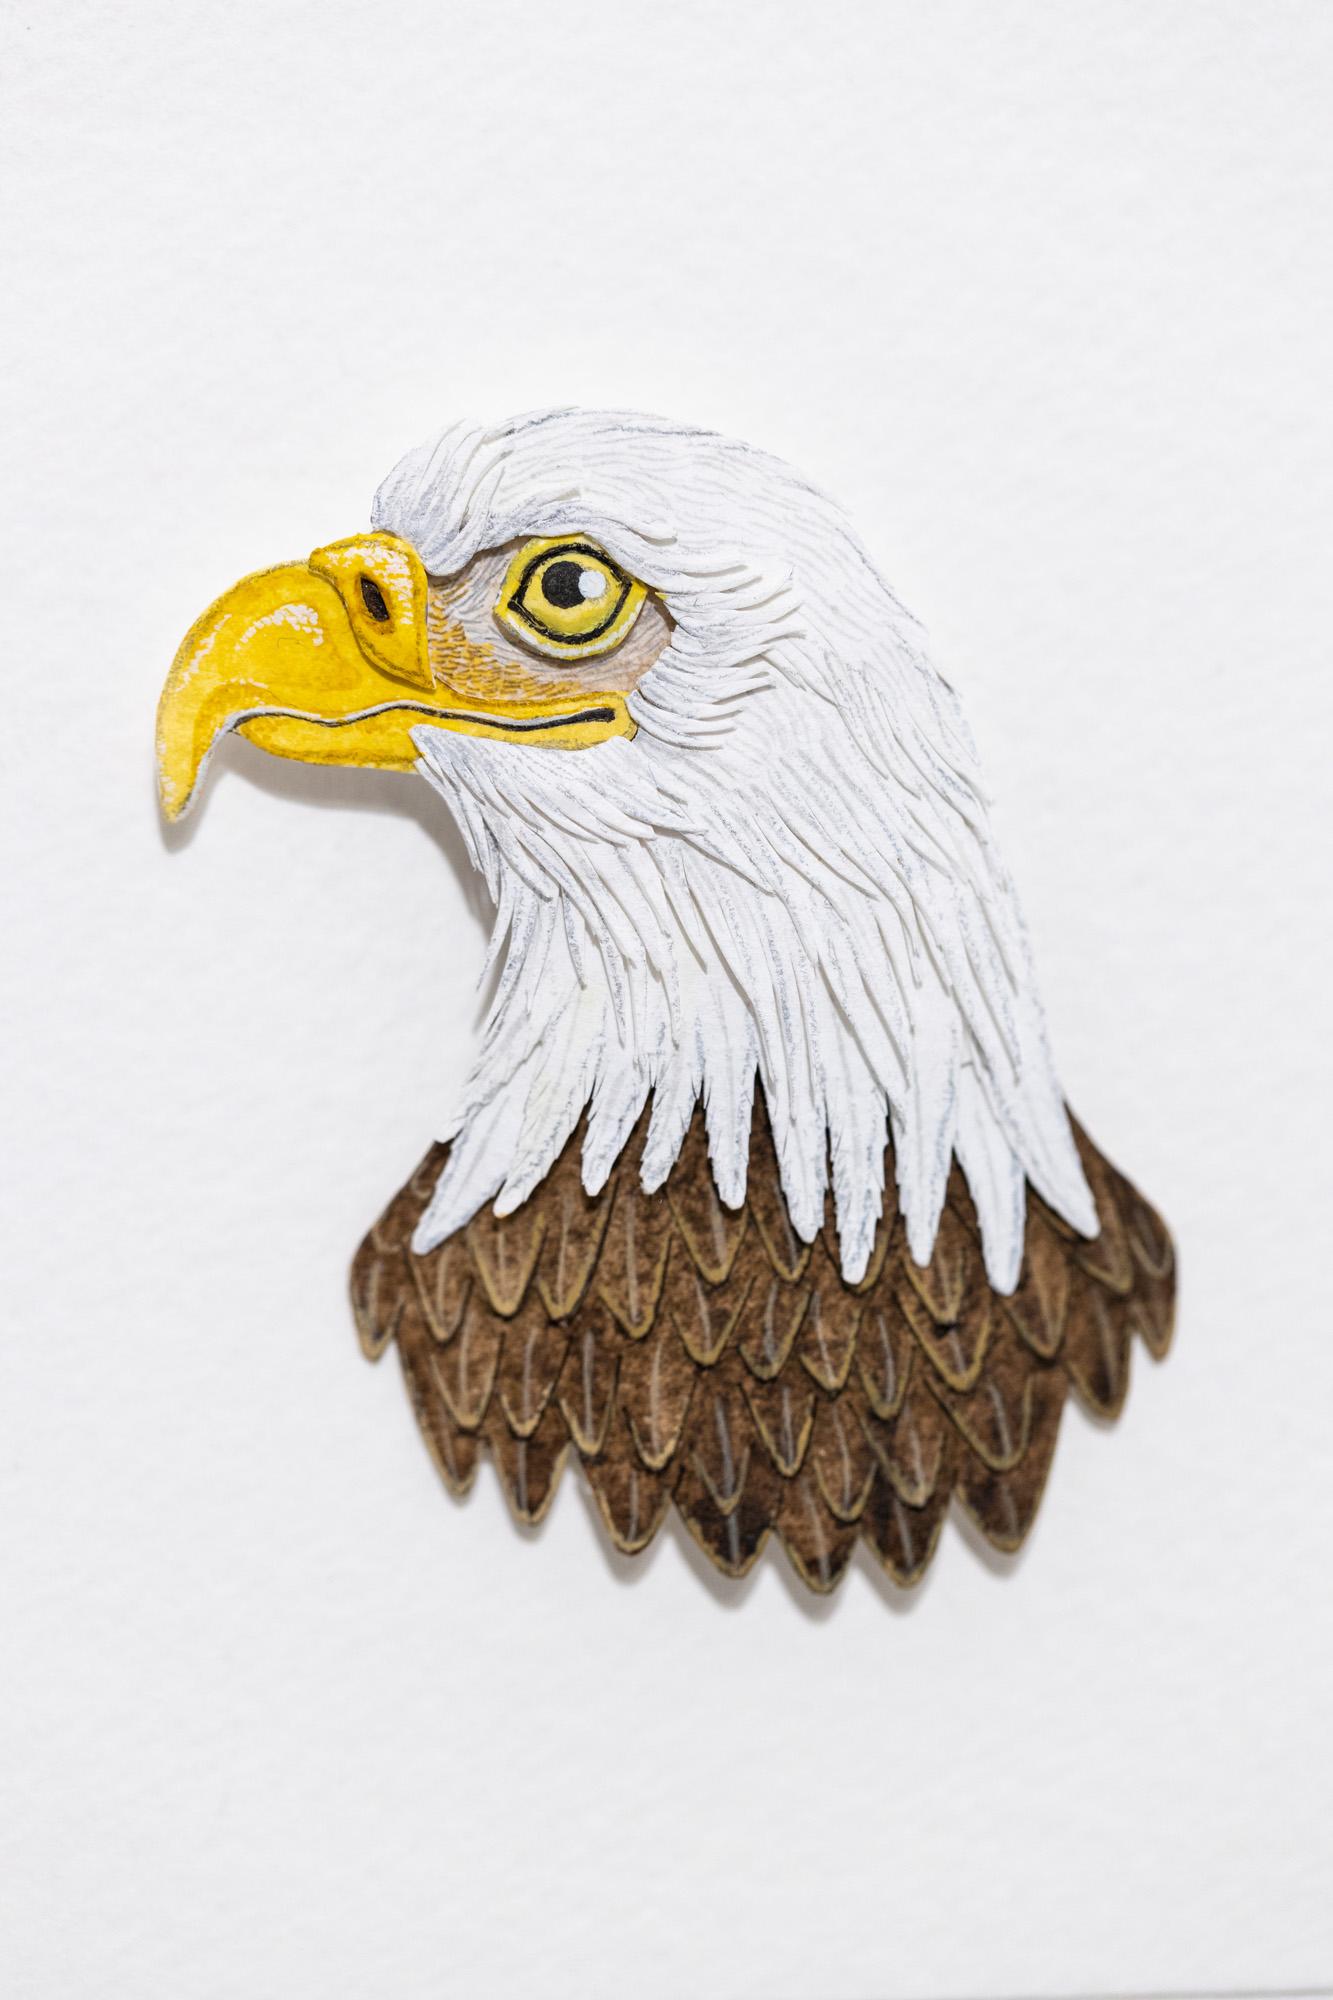 Bald Eagle Portrait - Art by Nayan and Venus